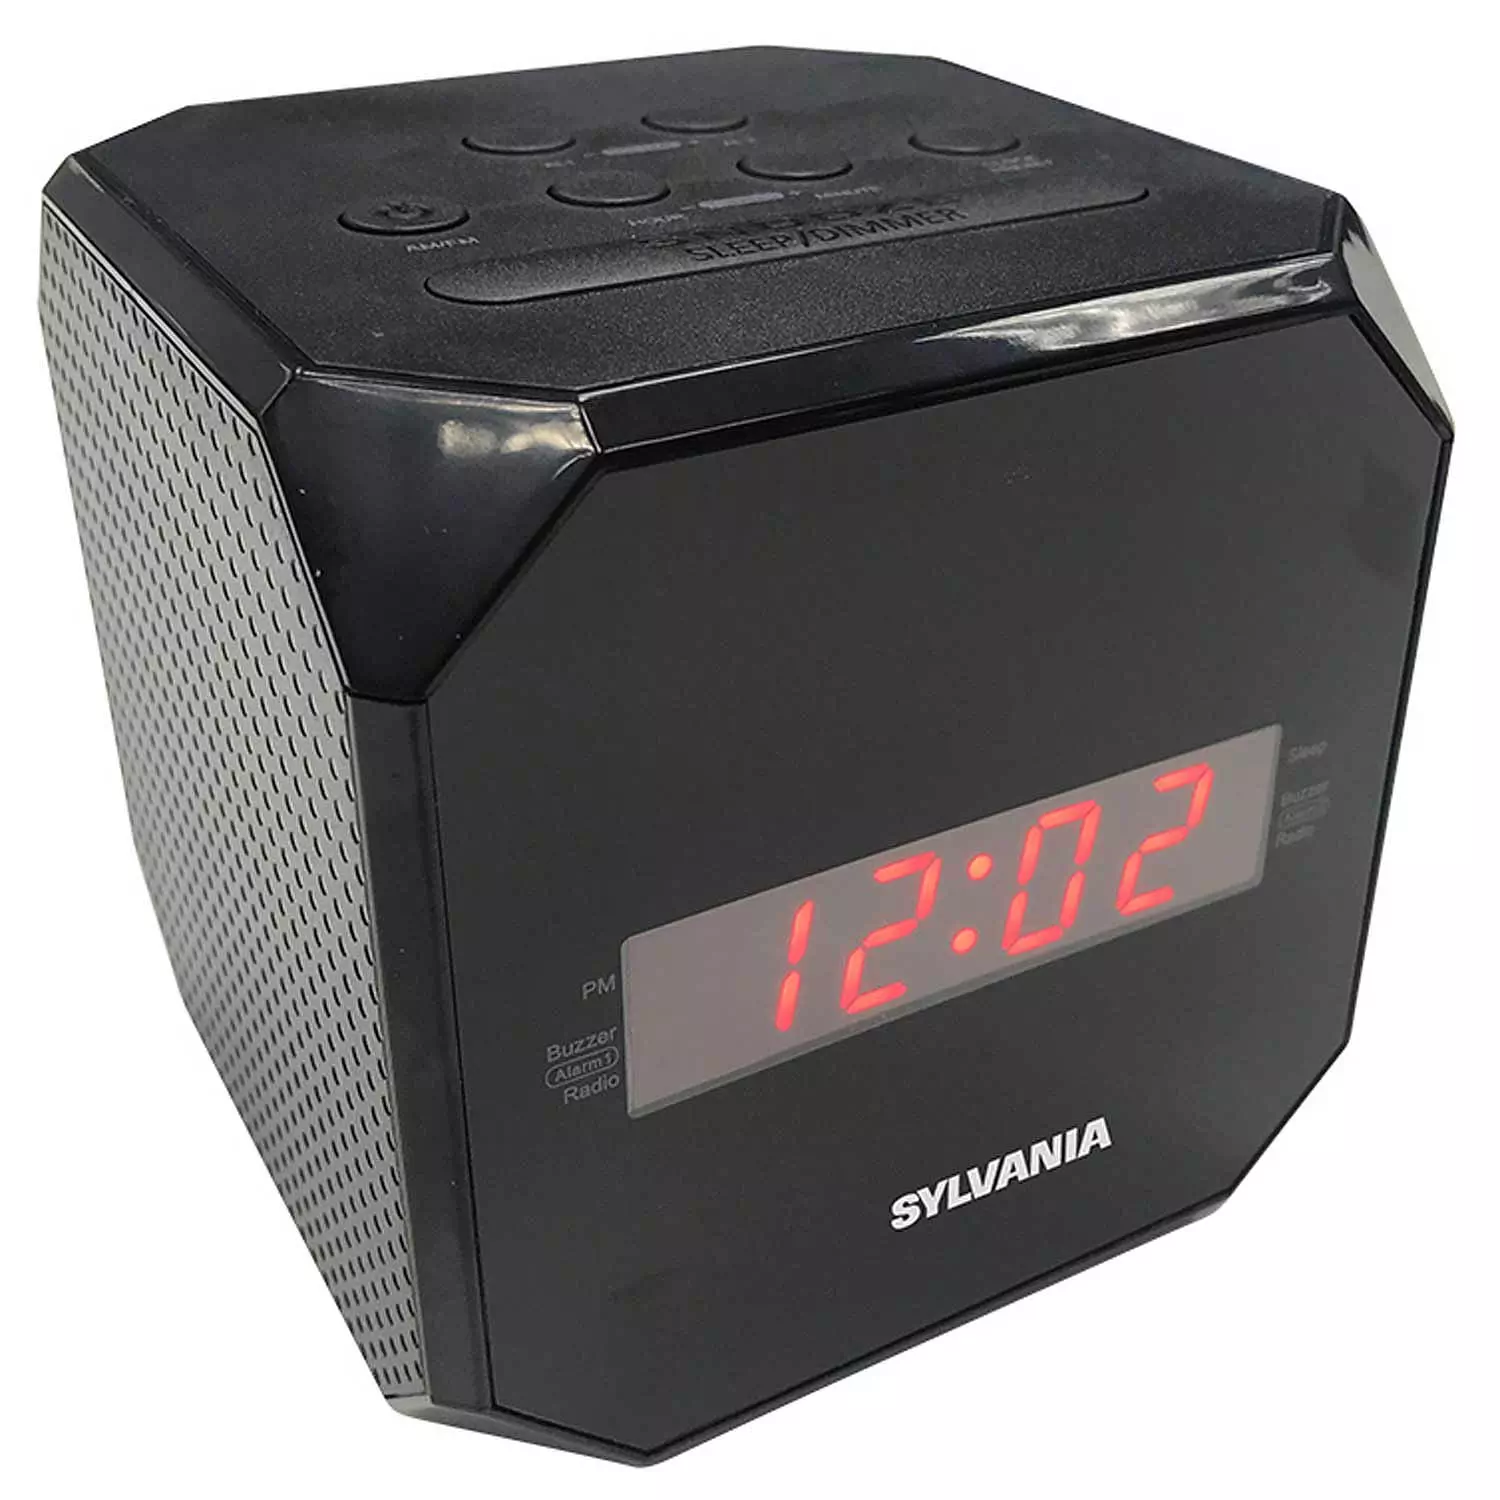 Sylvania - Cube clock radio